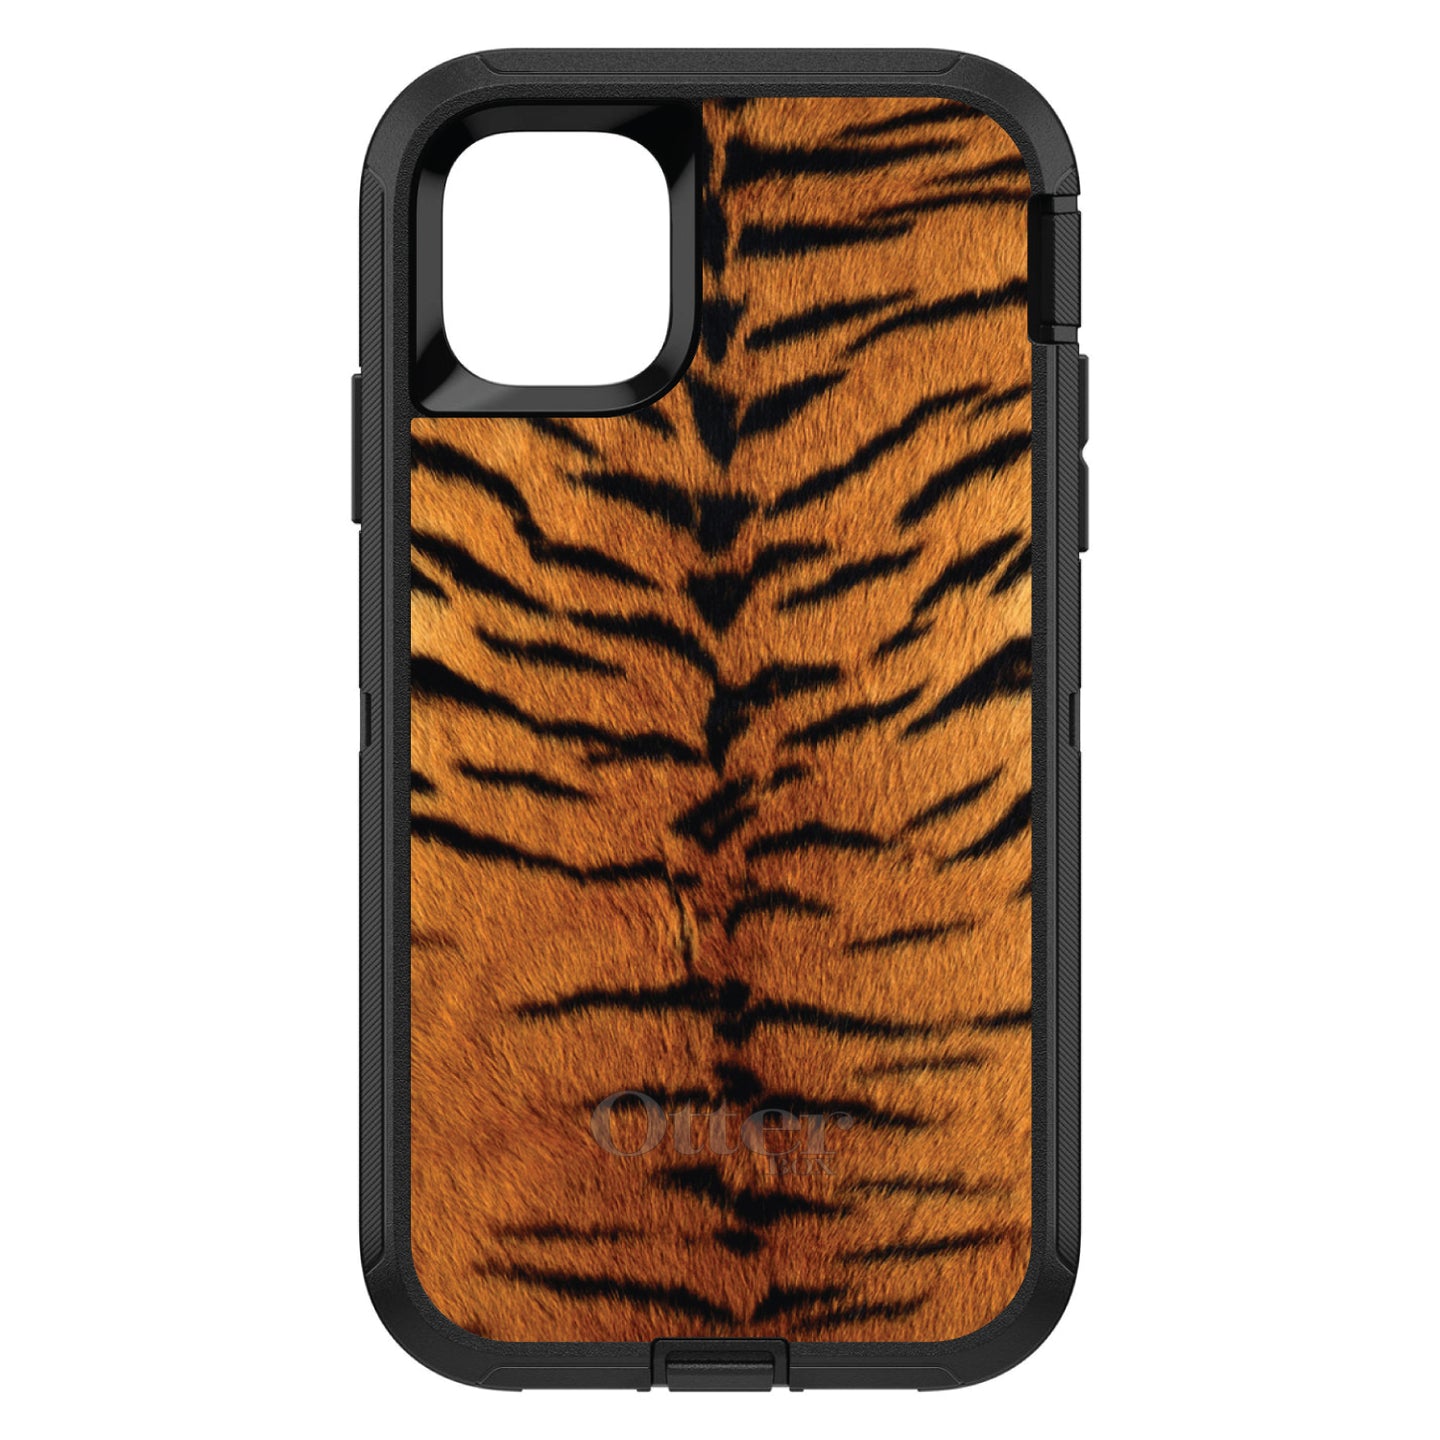 DistinctInk™ OtterBox Defender Series Case for Apple iPhone / Samsung Galaxy / Google Pixel - Yellow Black Tiger Fur Skin